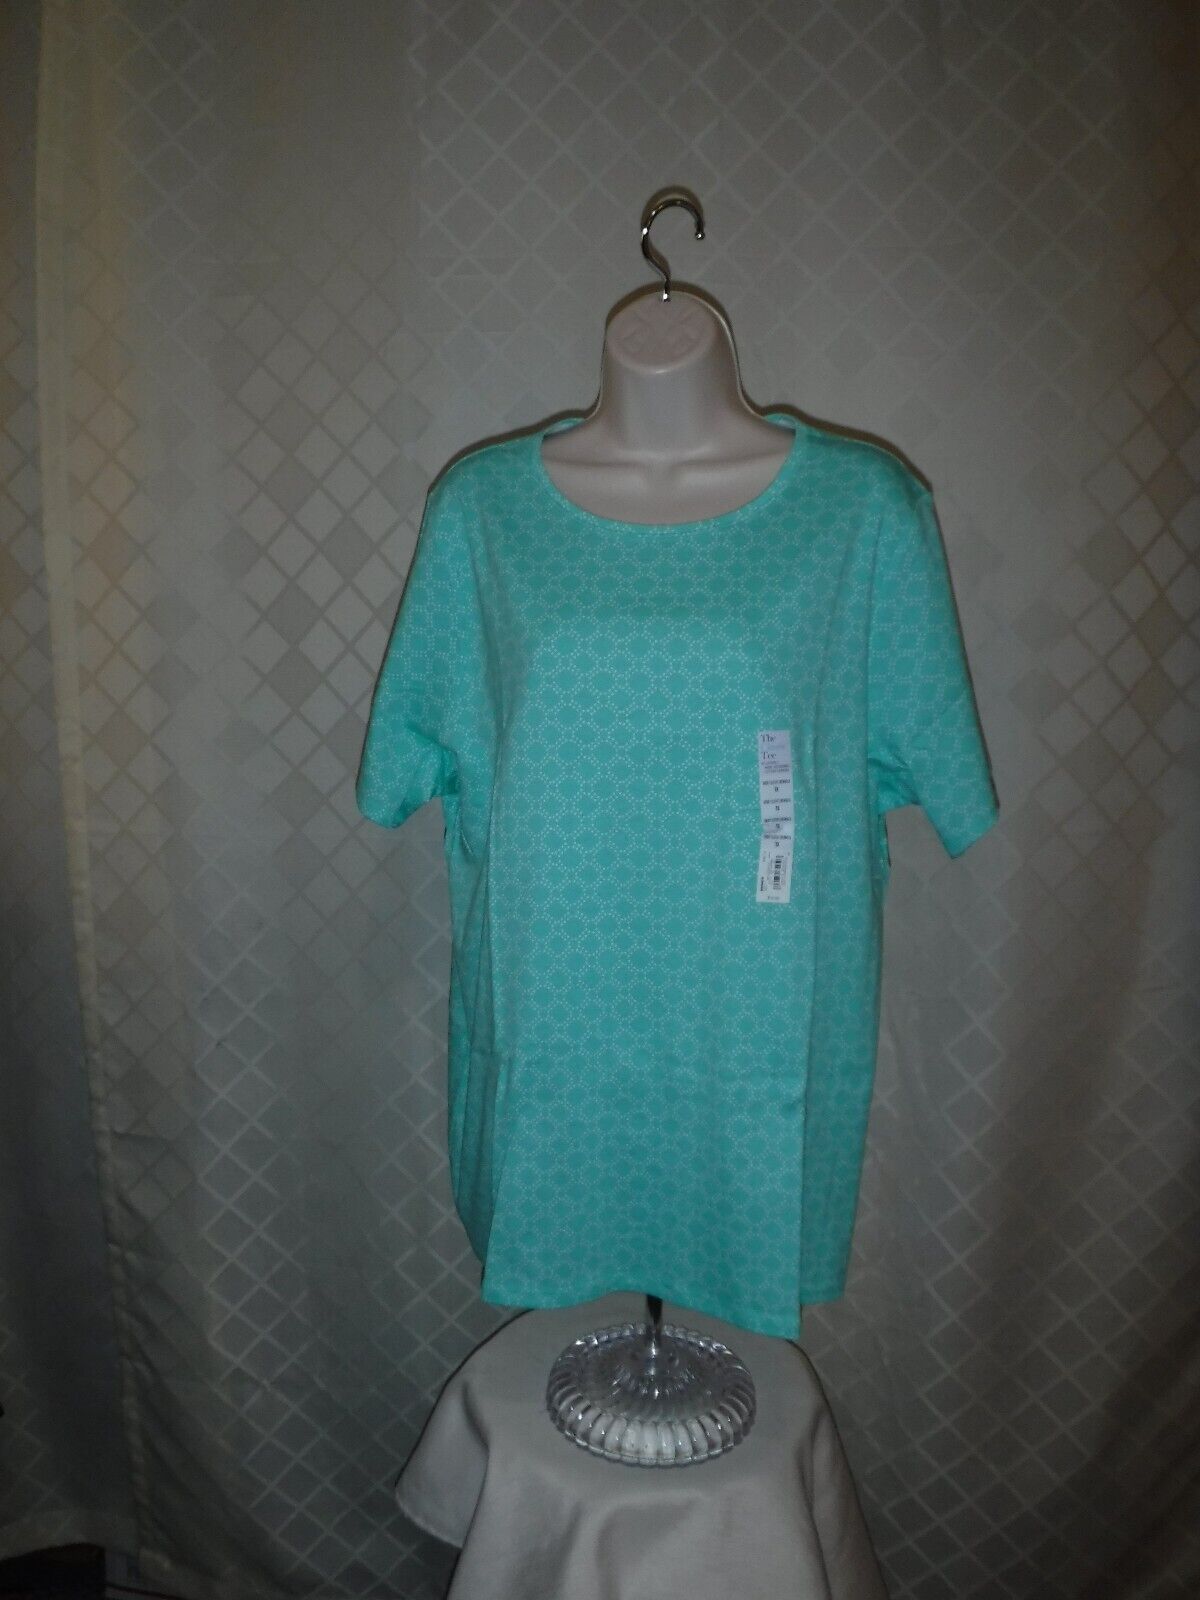 Size Plus Short Sleeve Women\'s T-Shirts ,3X,2X,1X,0X,Croft & Barrow Multi Color